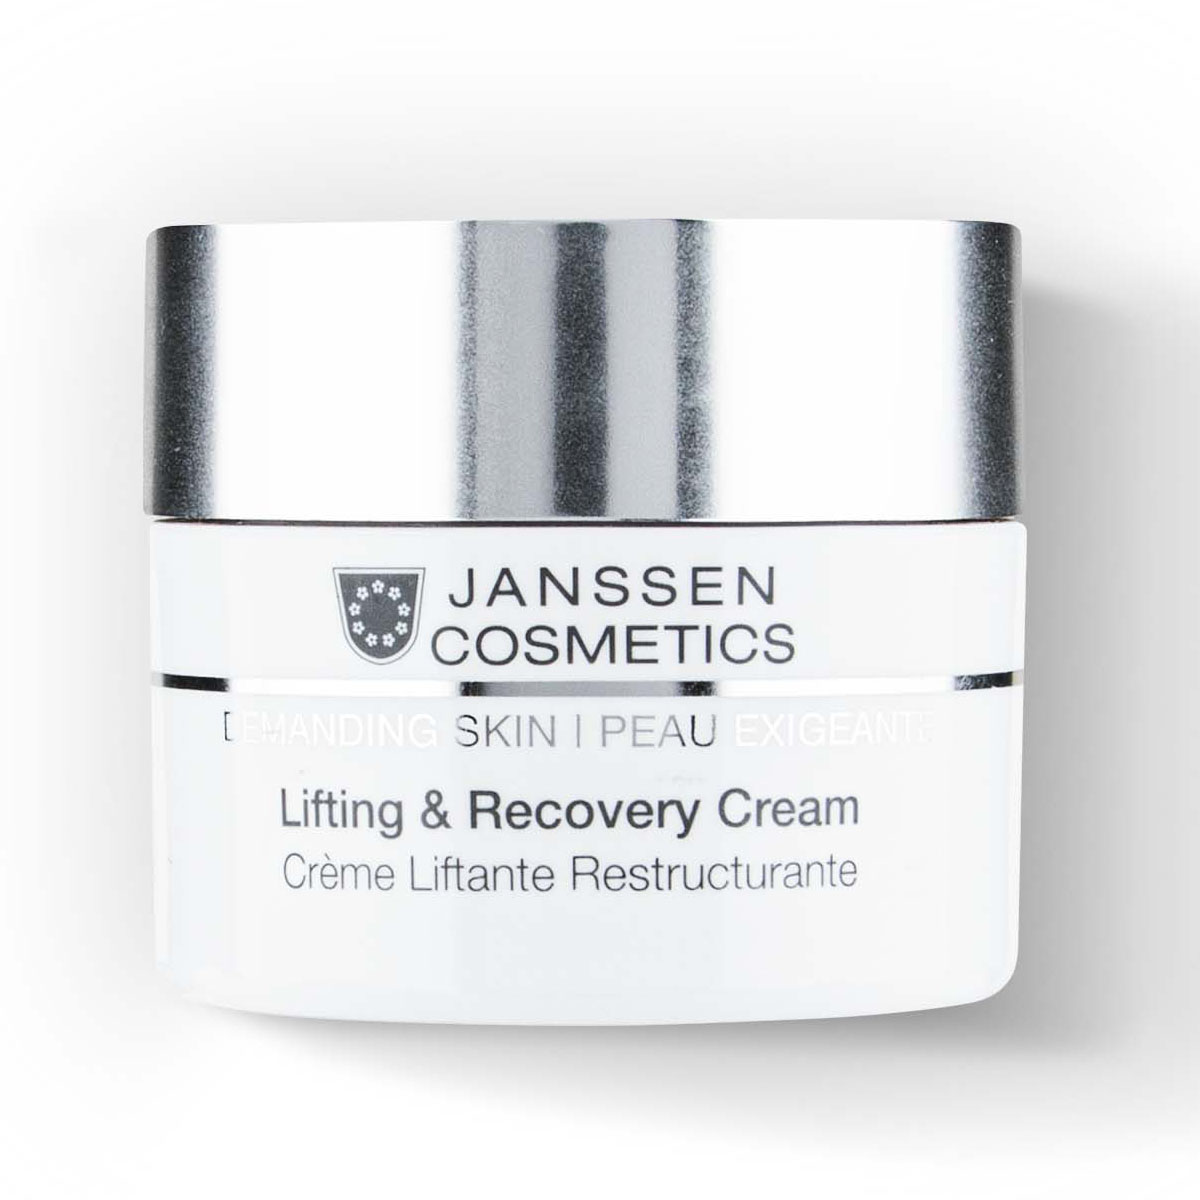 Janssen Cosmetics Восстанавливающий крем с лифтинг-эффектом Lifting & Recovery Cream, 50 мл (Janssen Cosmetics, Demanding skin) janssen cosmetics восстанавливающий крем для лица с лифтинг эффектом demanding skin lifting